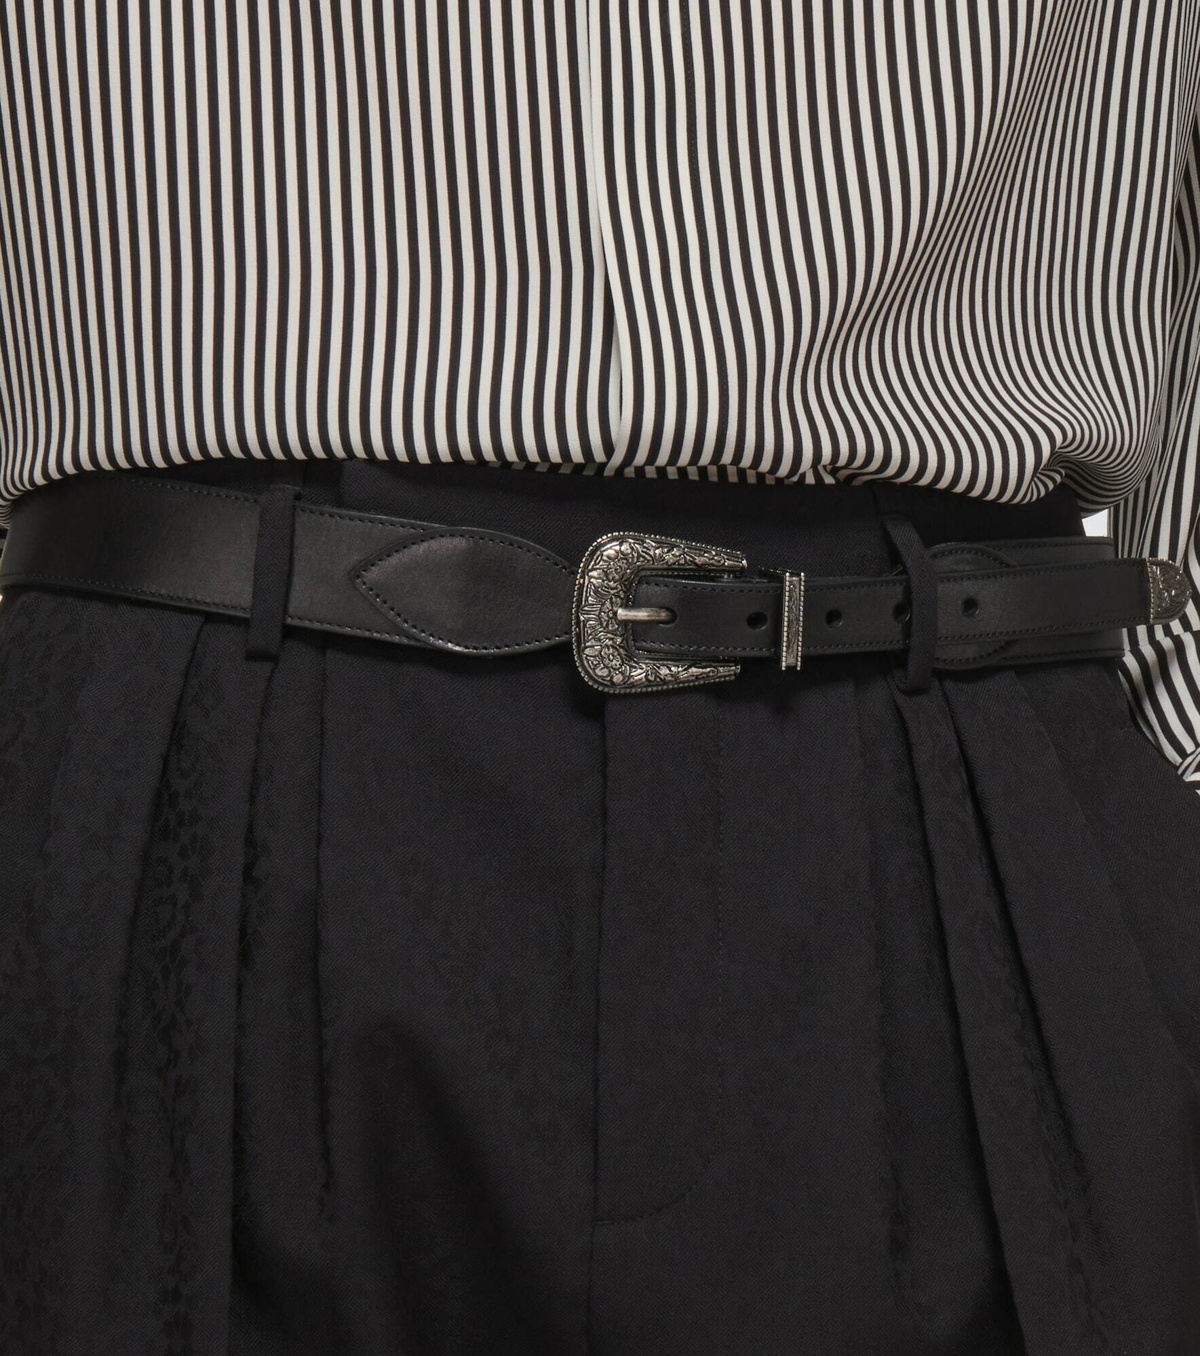 Saint Laurent Embellished Leather Belt - New in Dust Bag - The